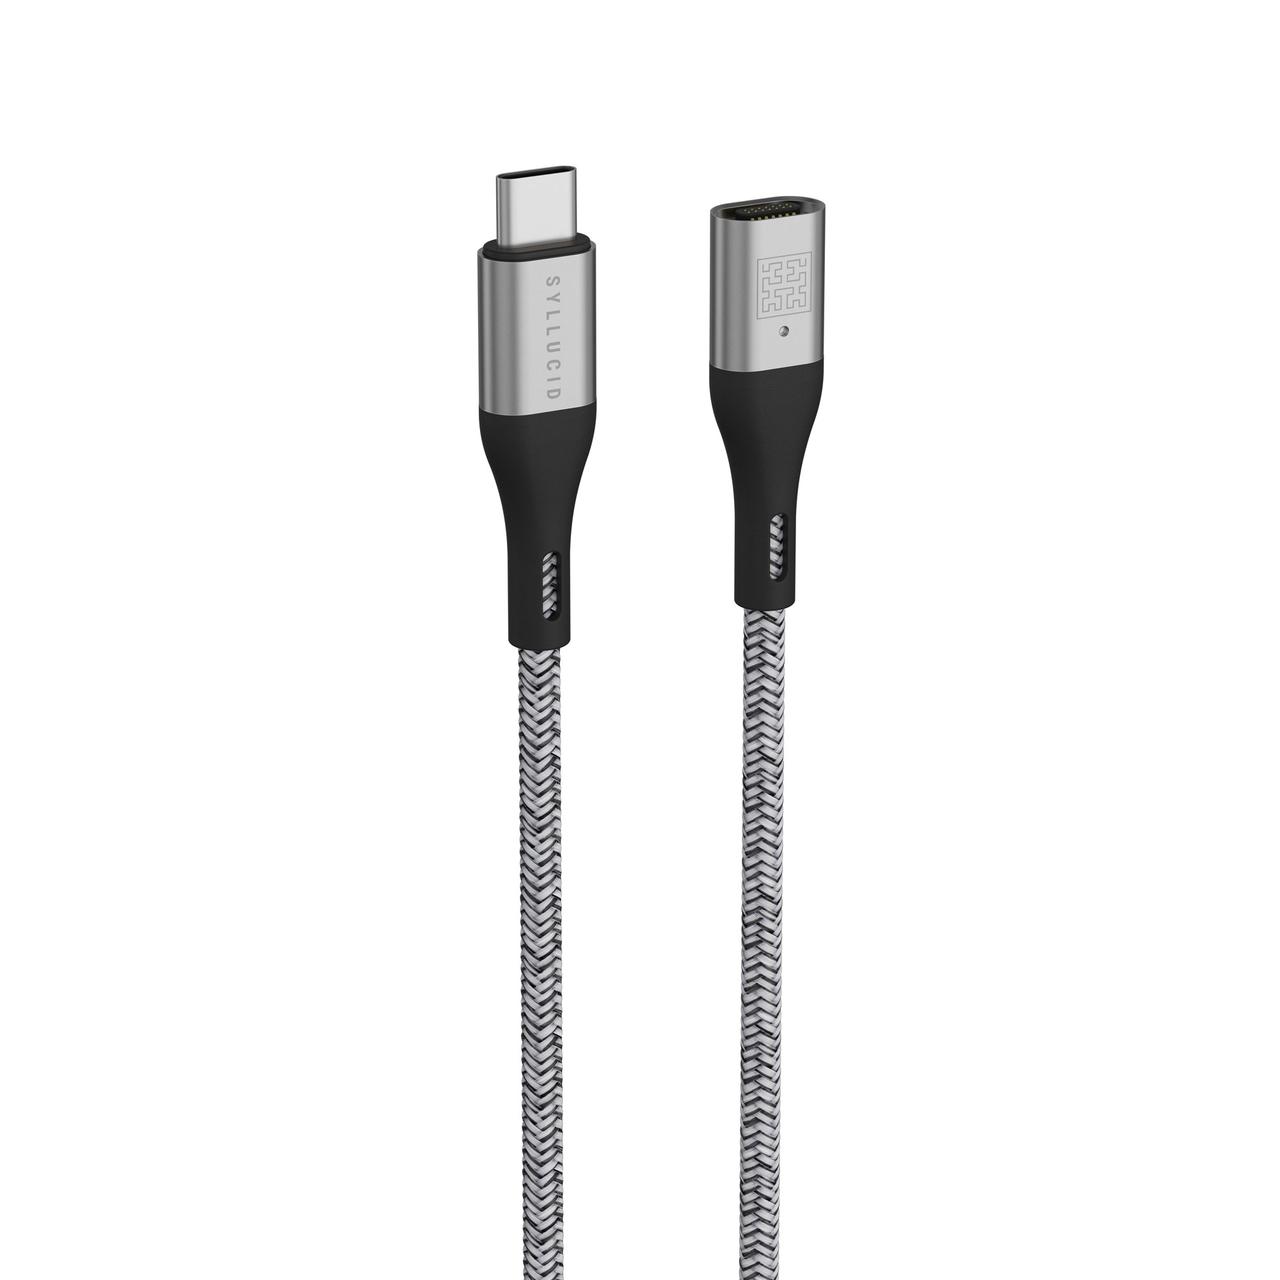 Syllucid Charge All-in-one Ladekabel mit Adaptern - modulares USB-Kabel